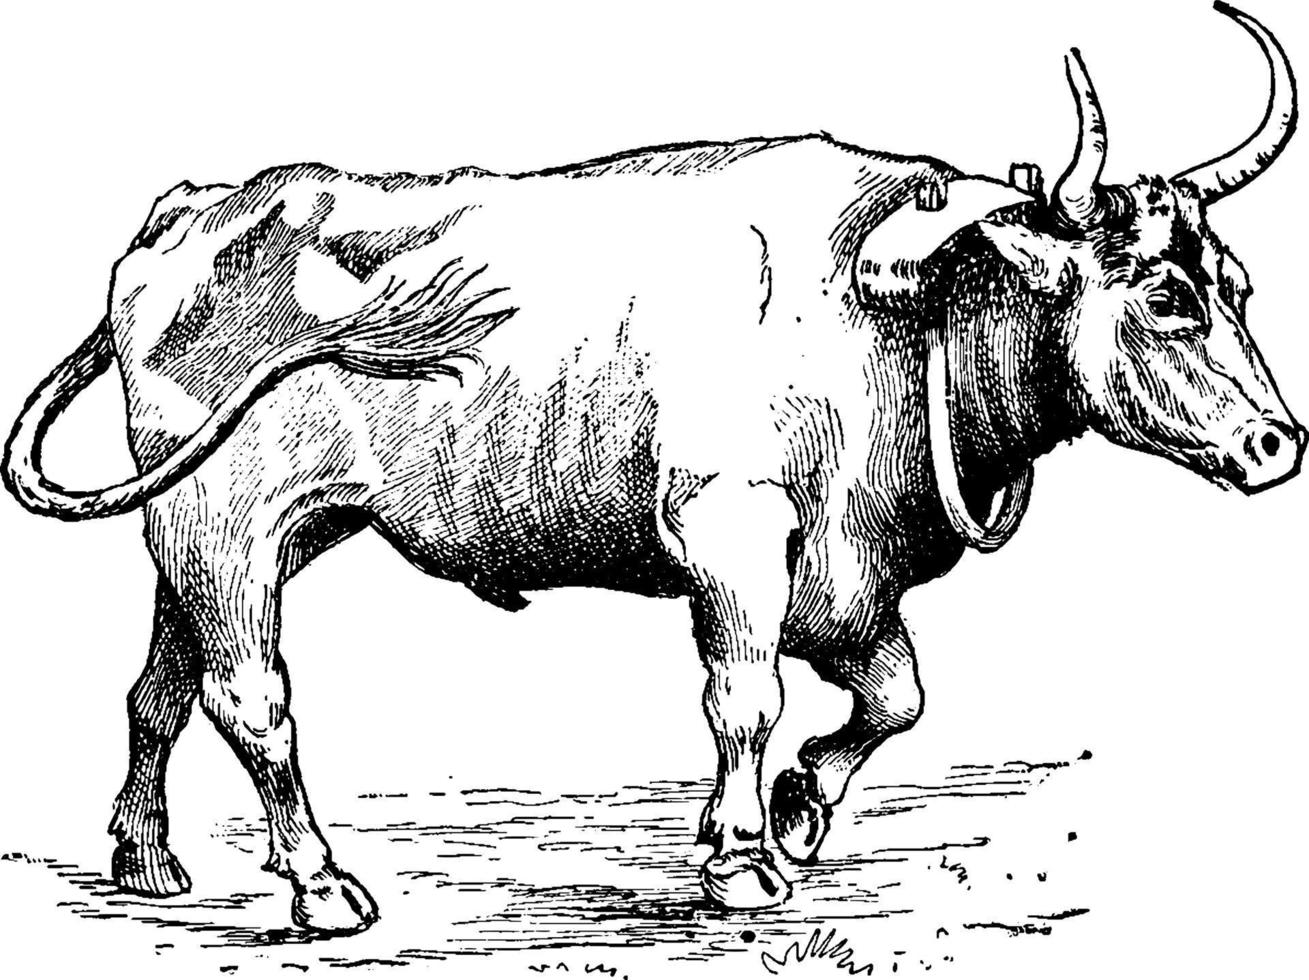 Shaking the Milk, vintage illustration. vector